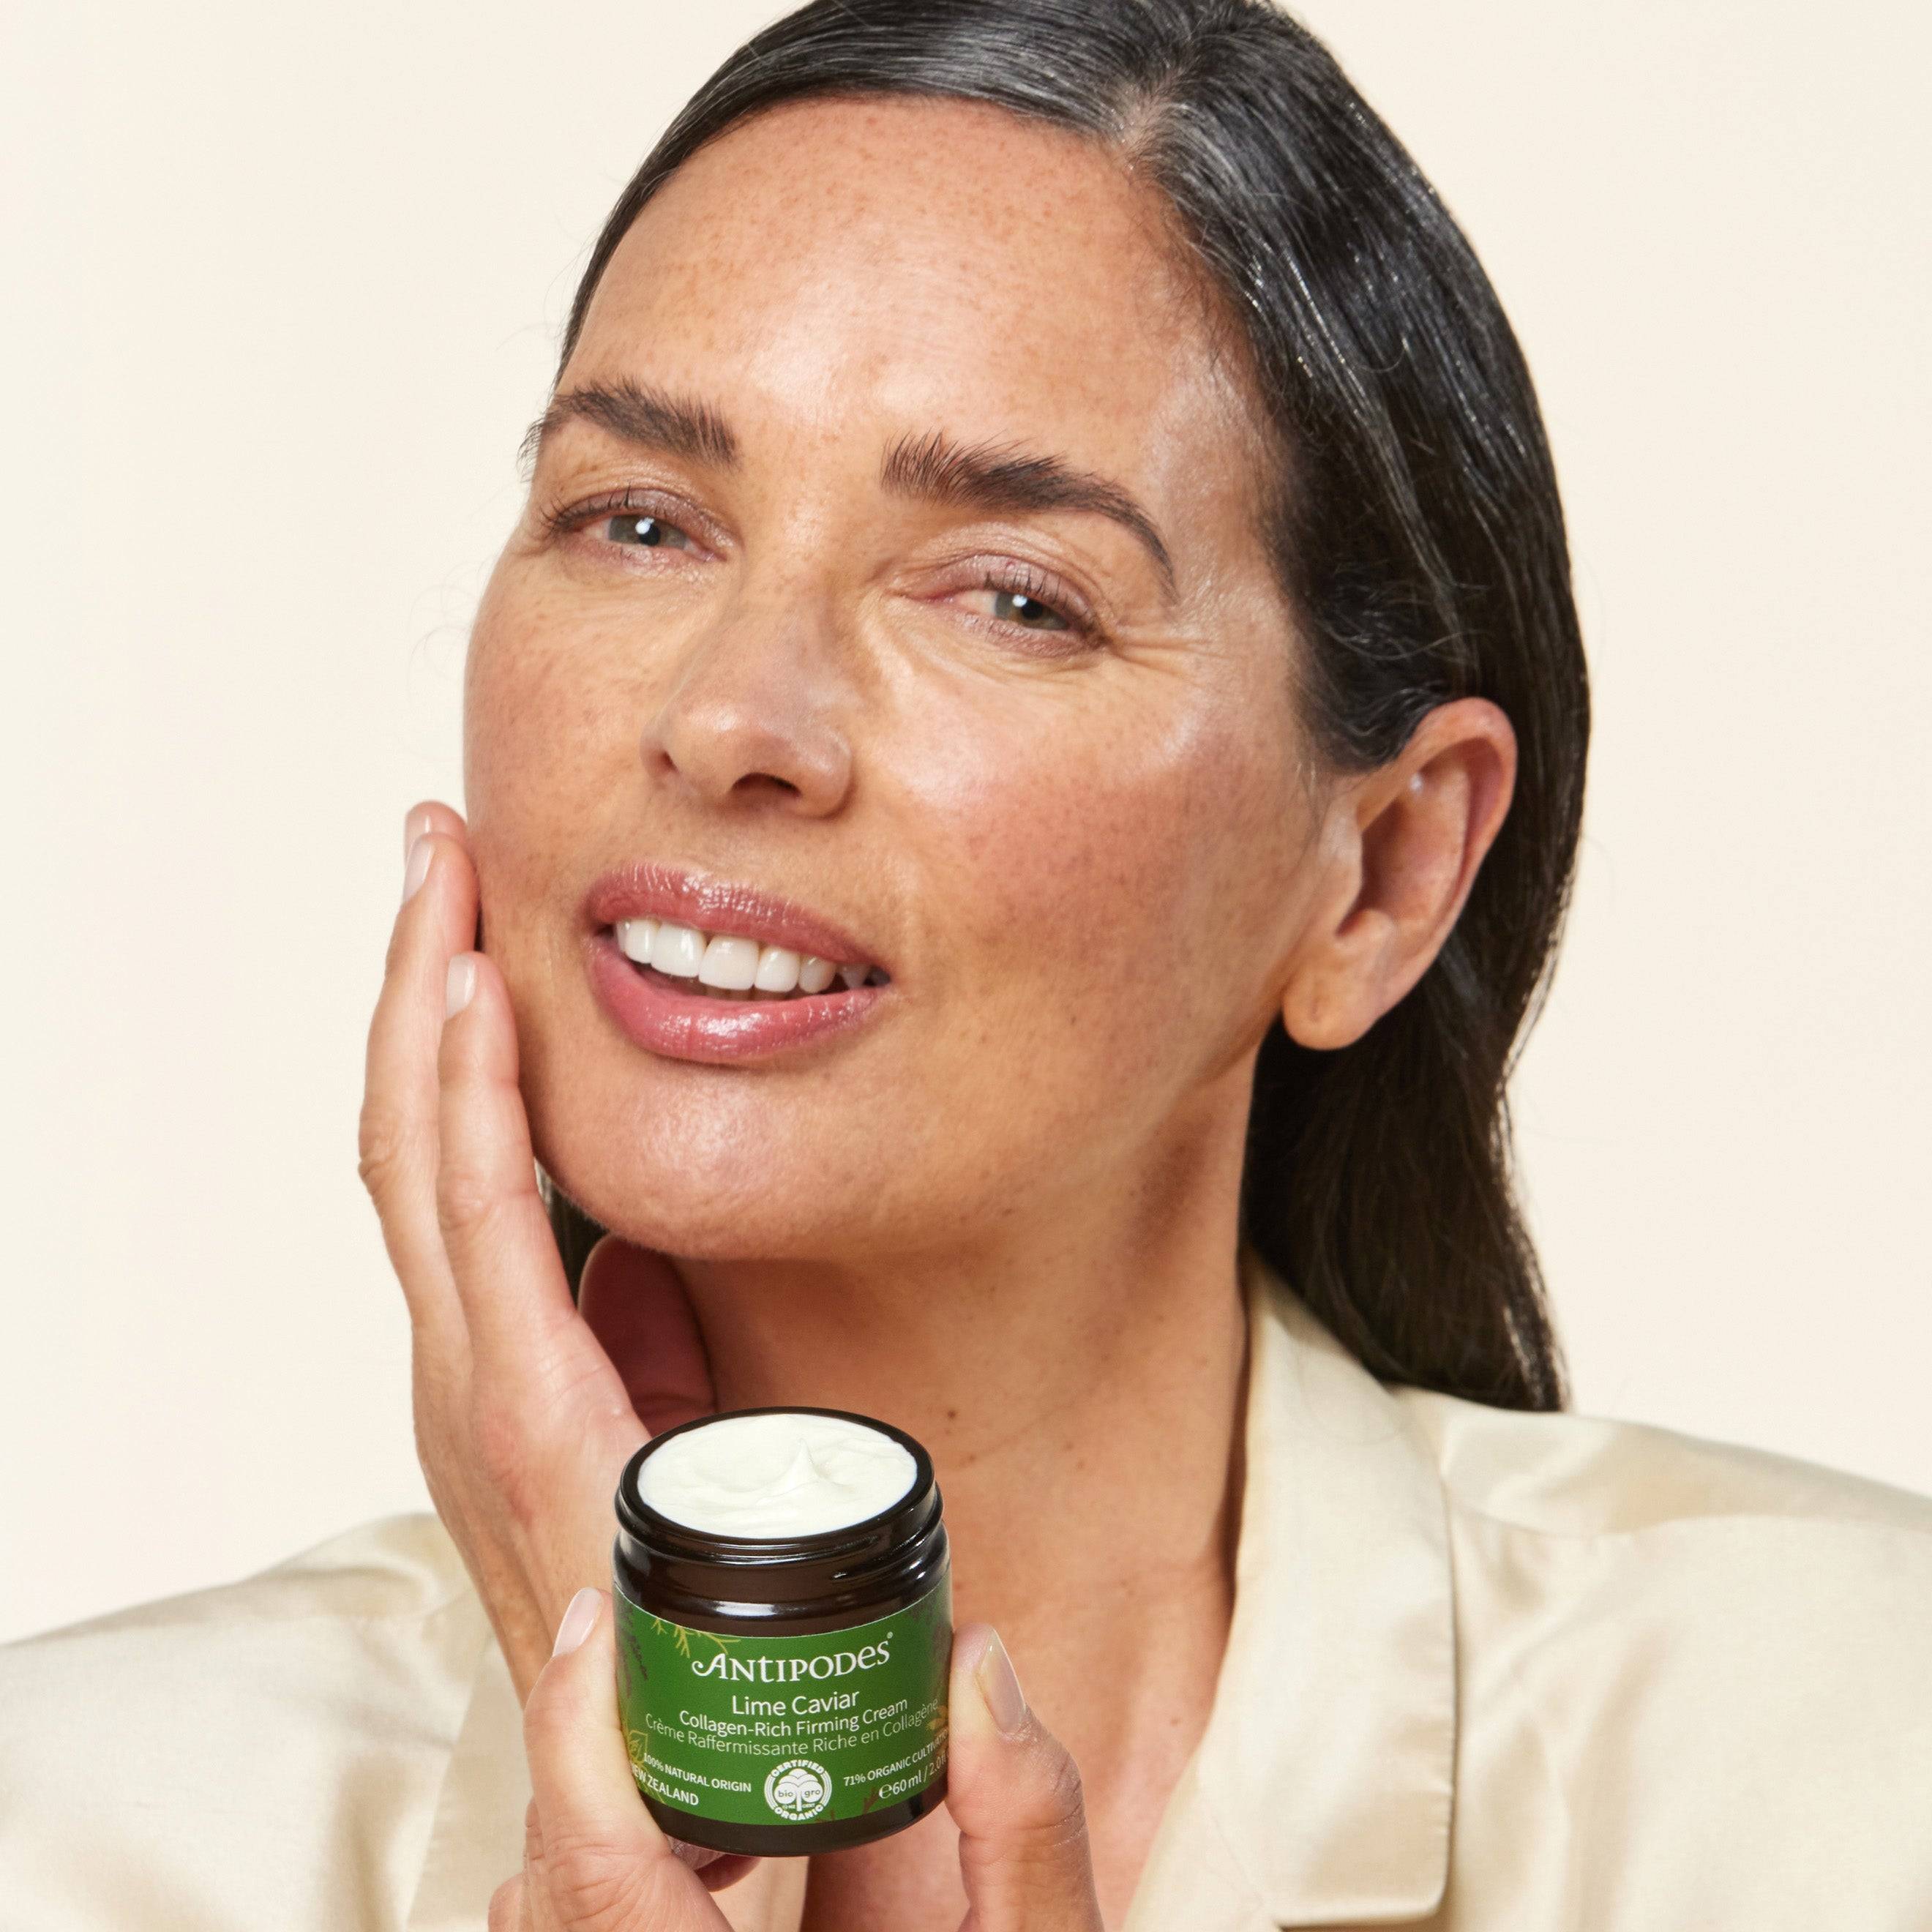 Mature woman holding Lime Caviar Collagen-Rich Firming Cream.